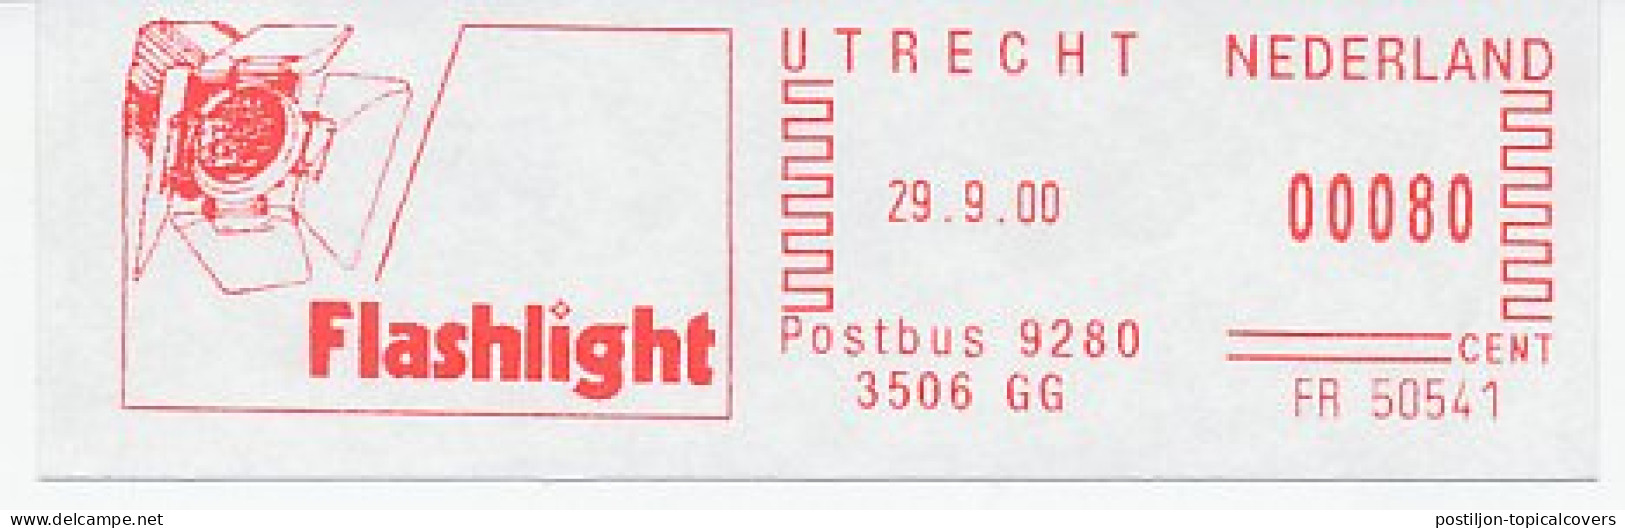 Meter Cut Netherlands 2000 Lamp - Flashlight - Electricidad